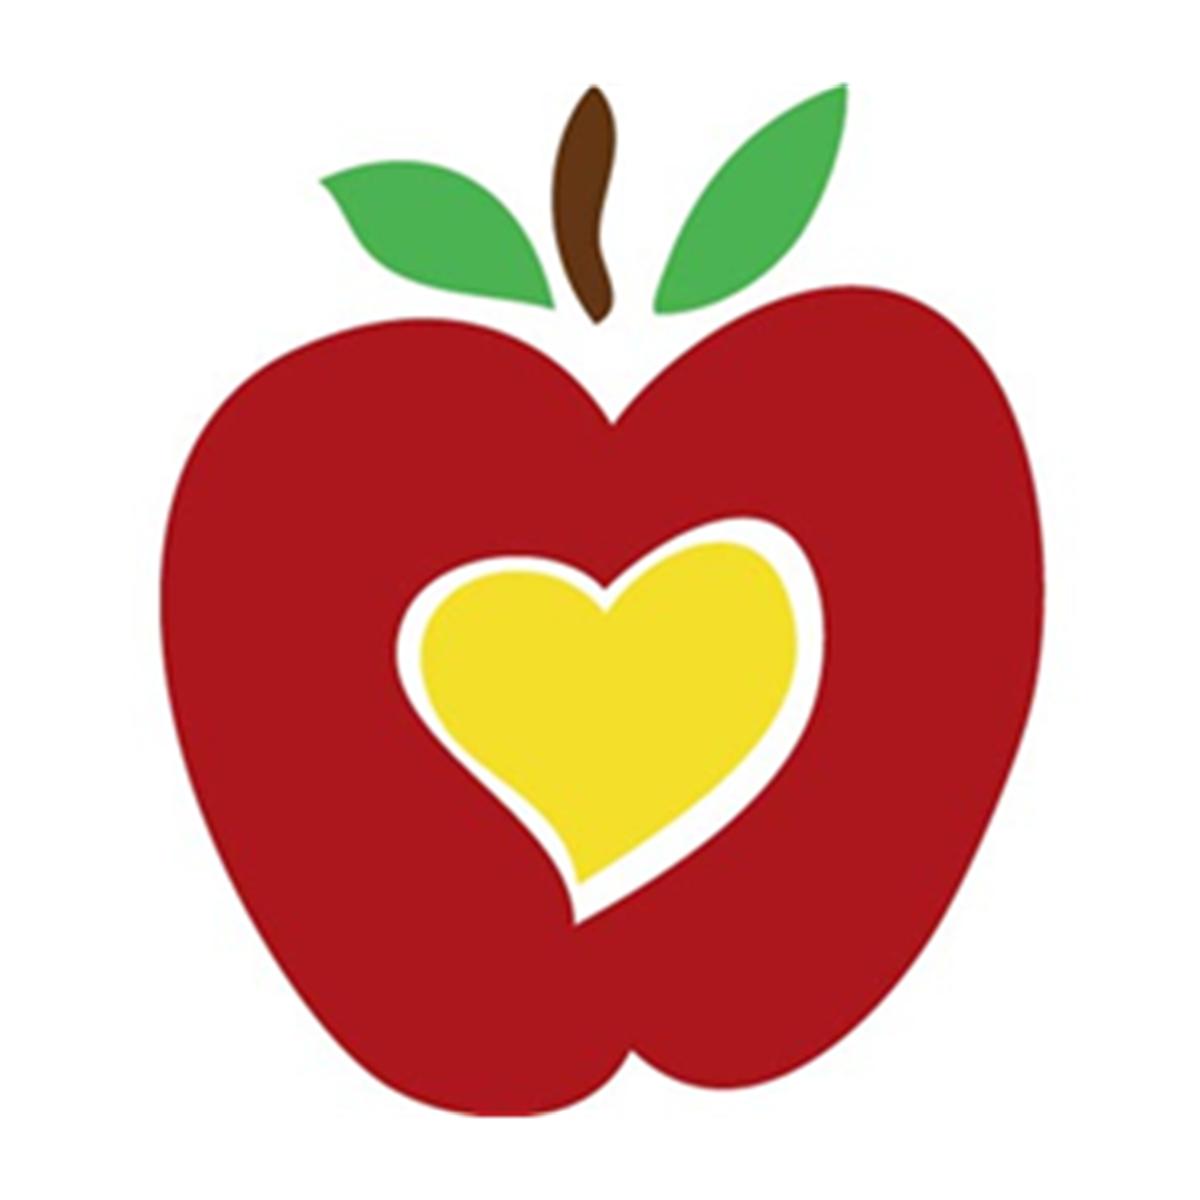 Teachers apple clipart